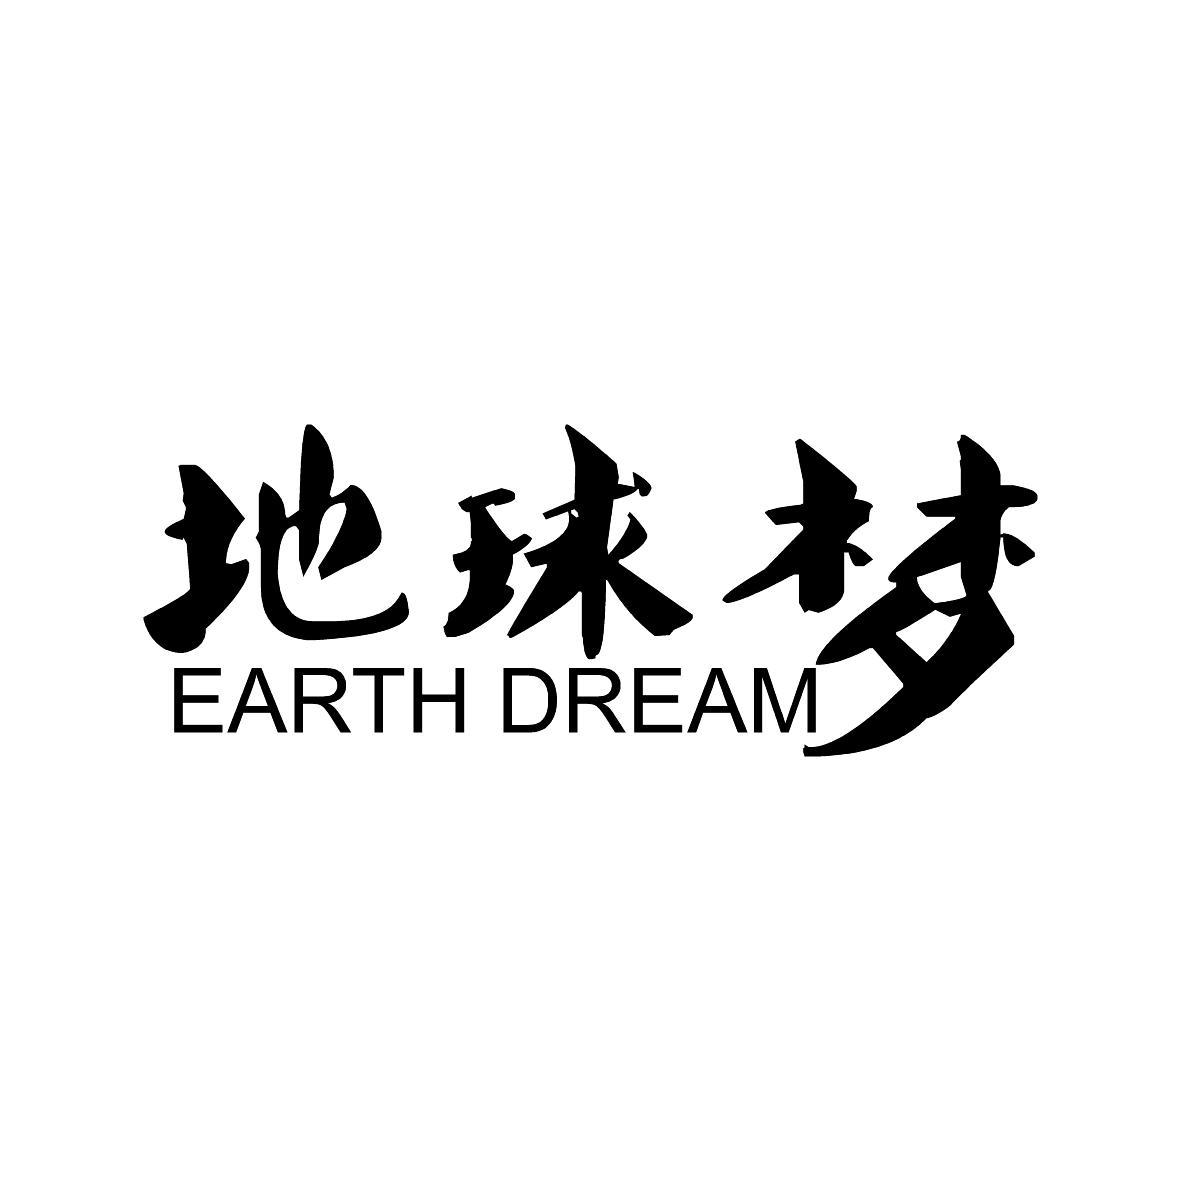  EARTH DREAM